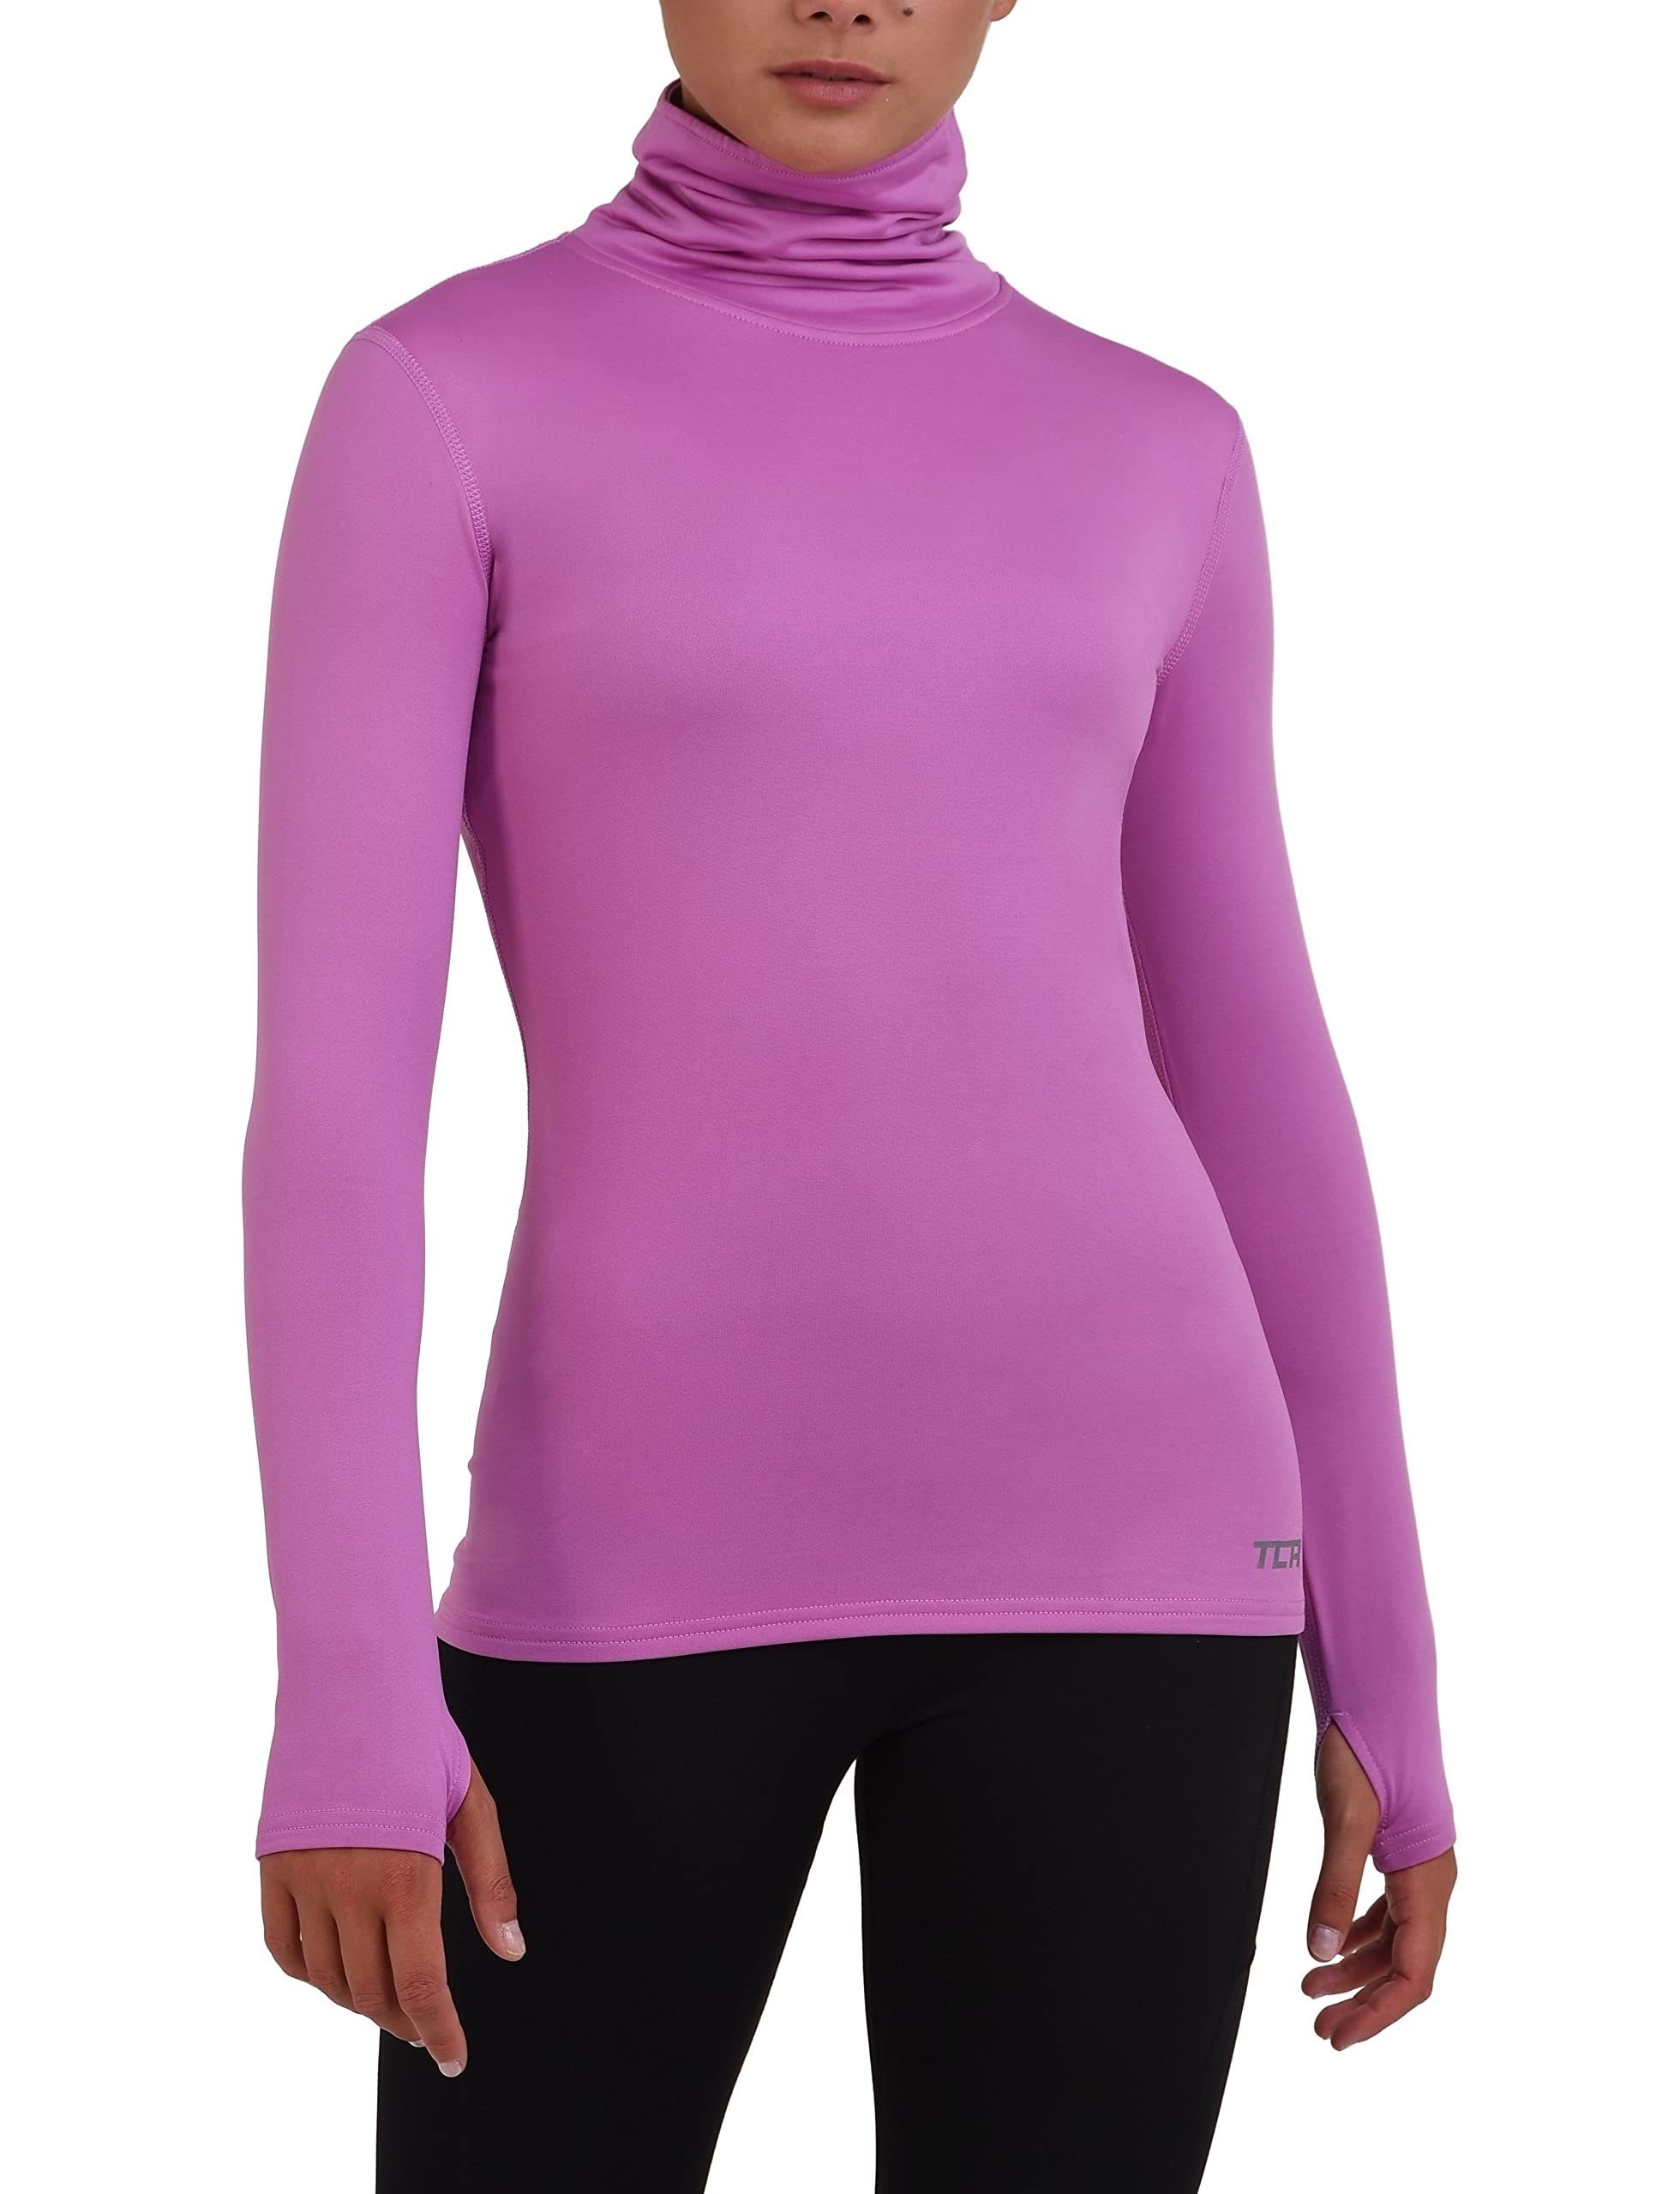 TCA Langarmshirt Womens Frauen mit (Pink) Laufshirt Crocus - Long - Winter - S Reißverschluss Sleeve, Neck TCA Spring Funnel S Rosa, Langarm Warm-Up